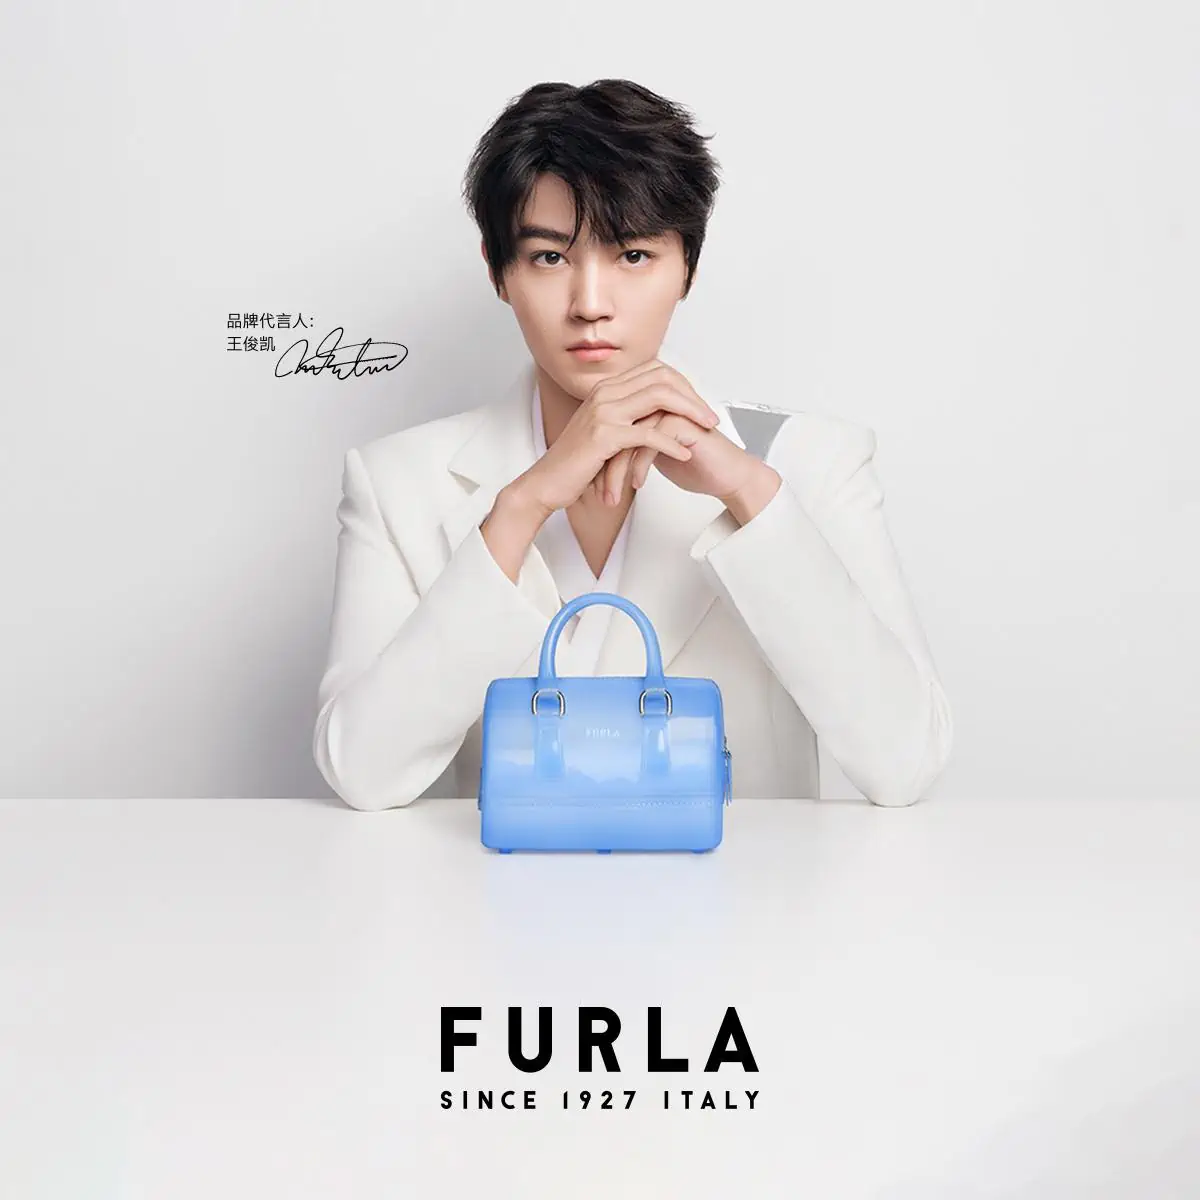 Karry Wang takes on new role as Furla brand ambassador